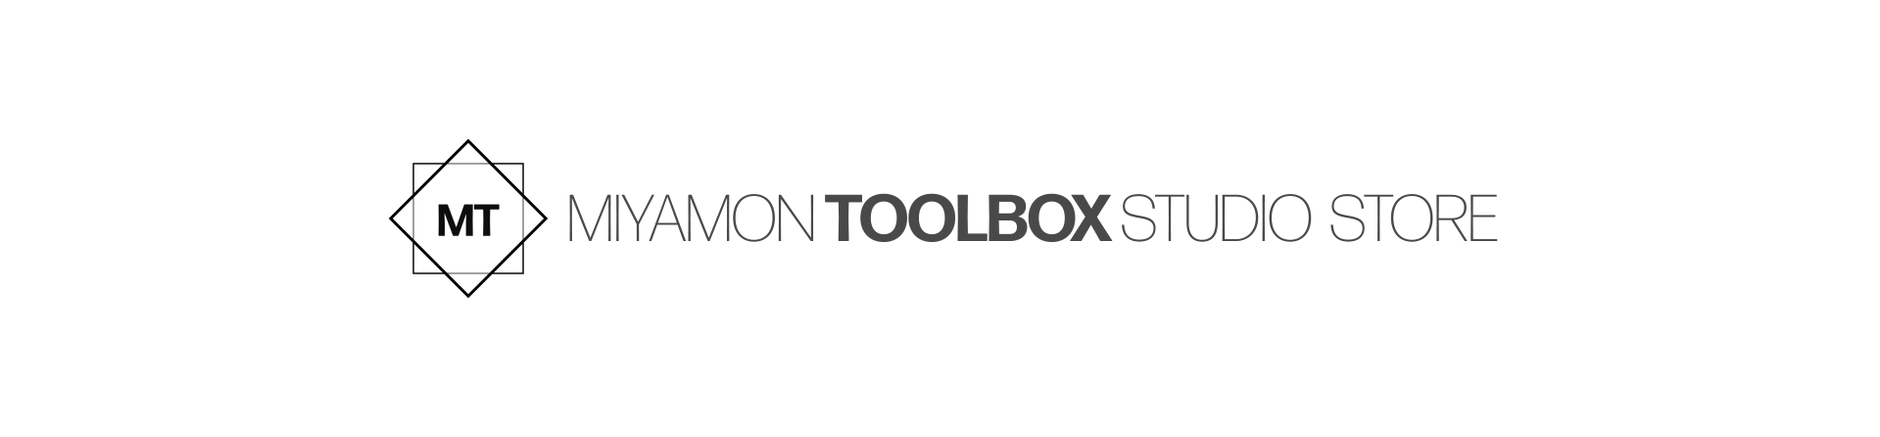 Miyamon Toolbox Studio Store